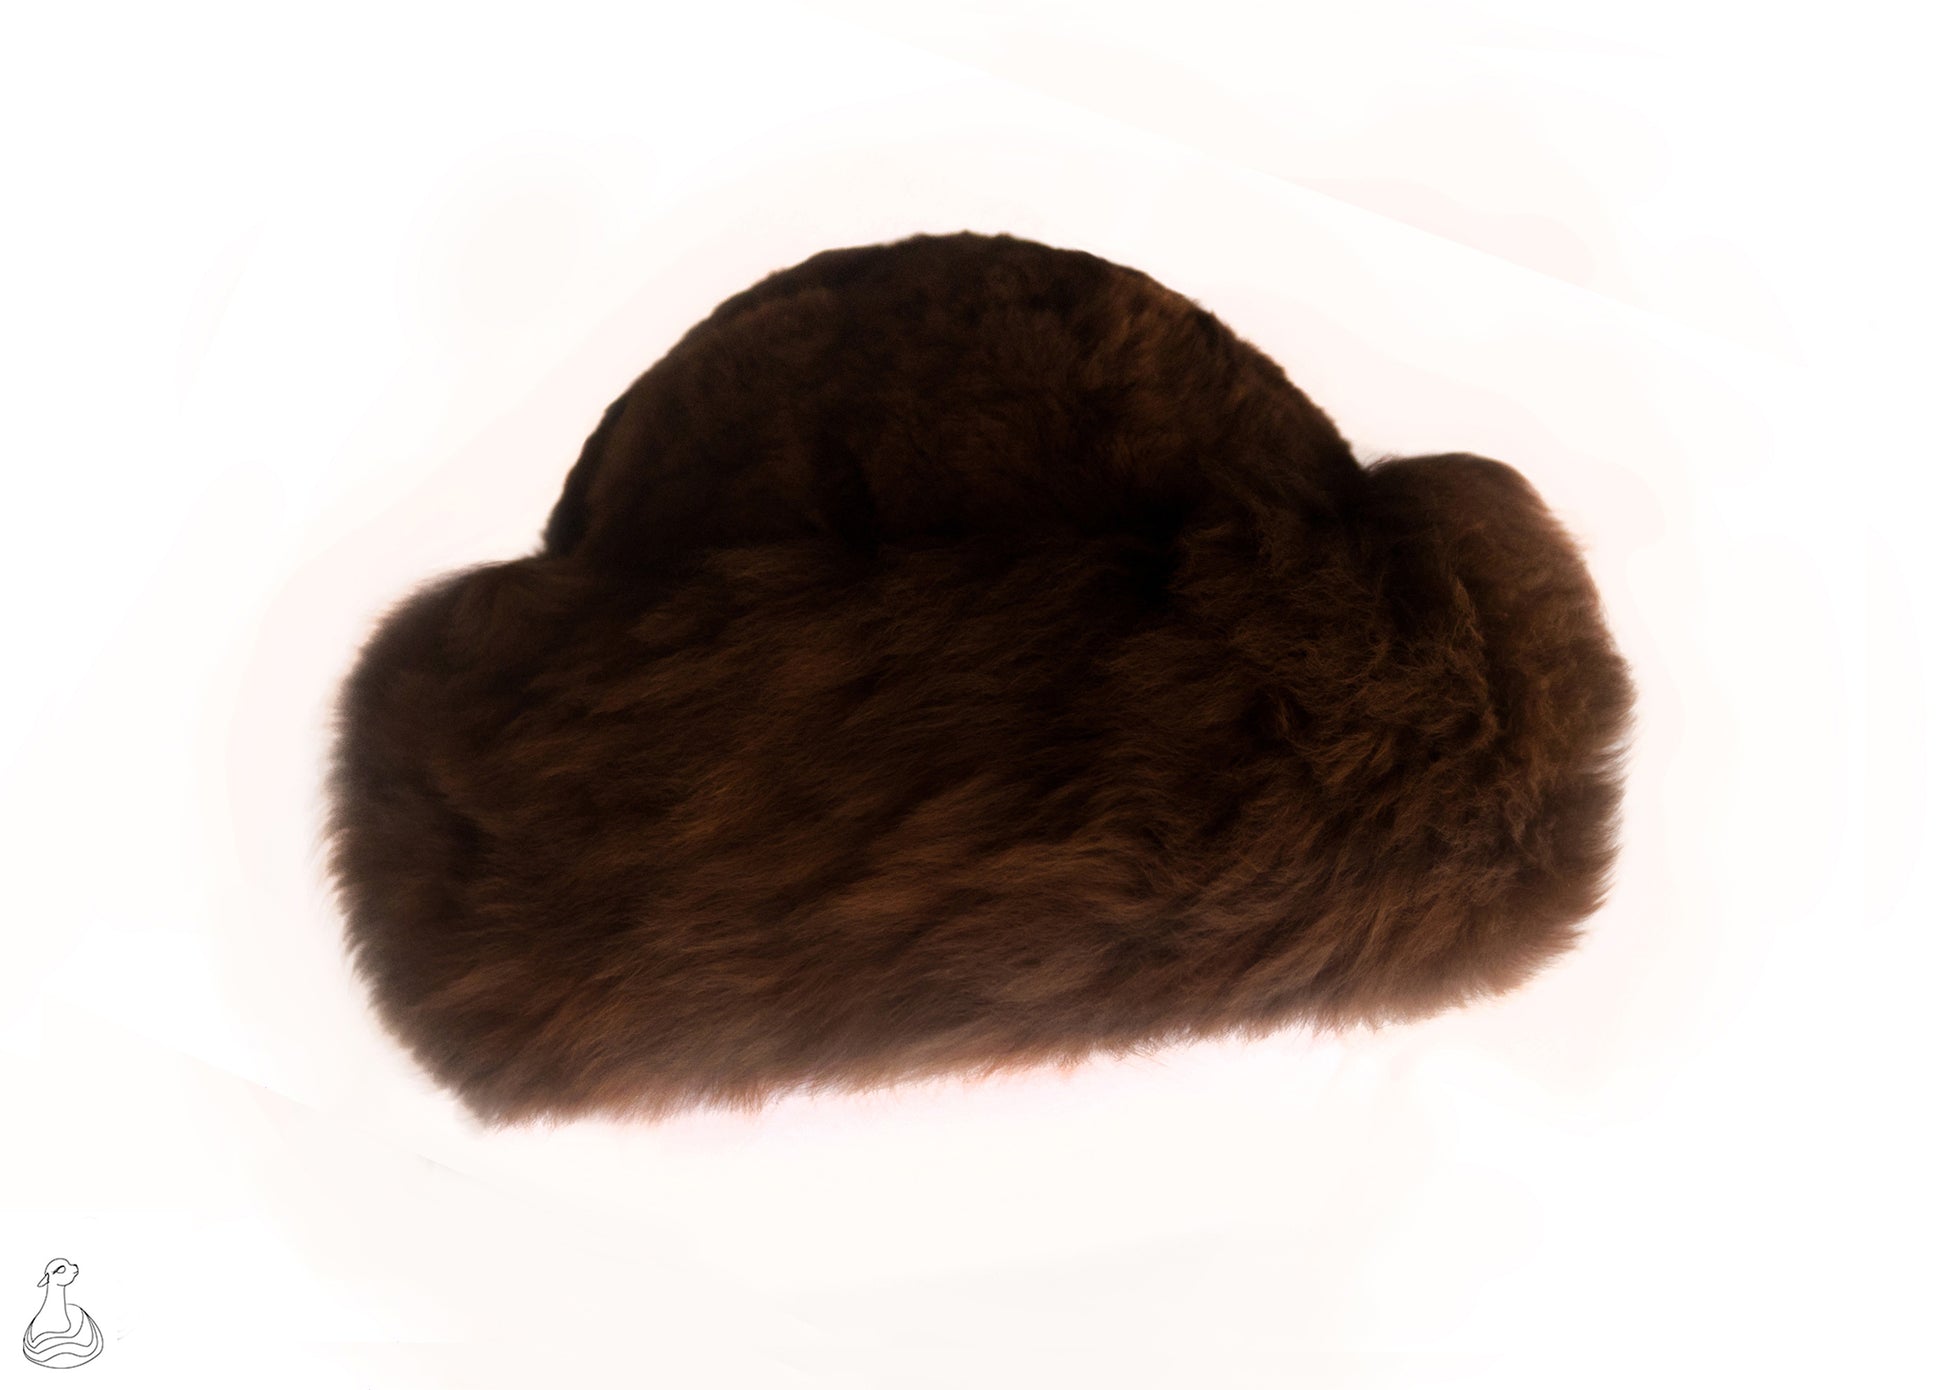 Fur Alpaca Hat True Black